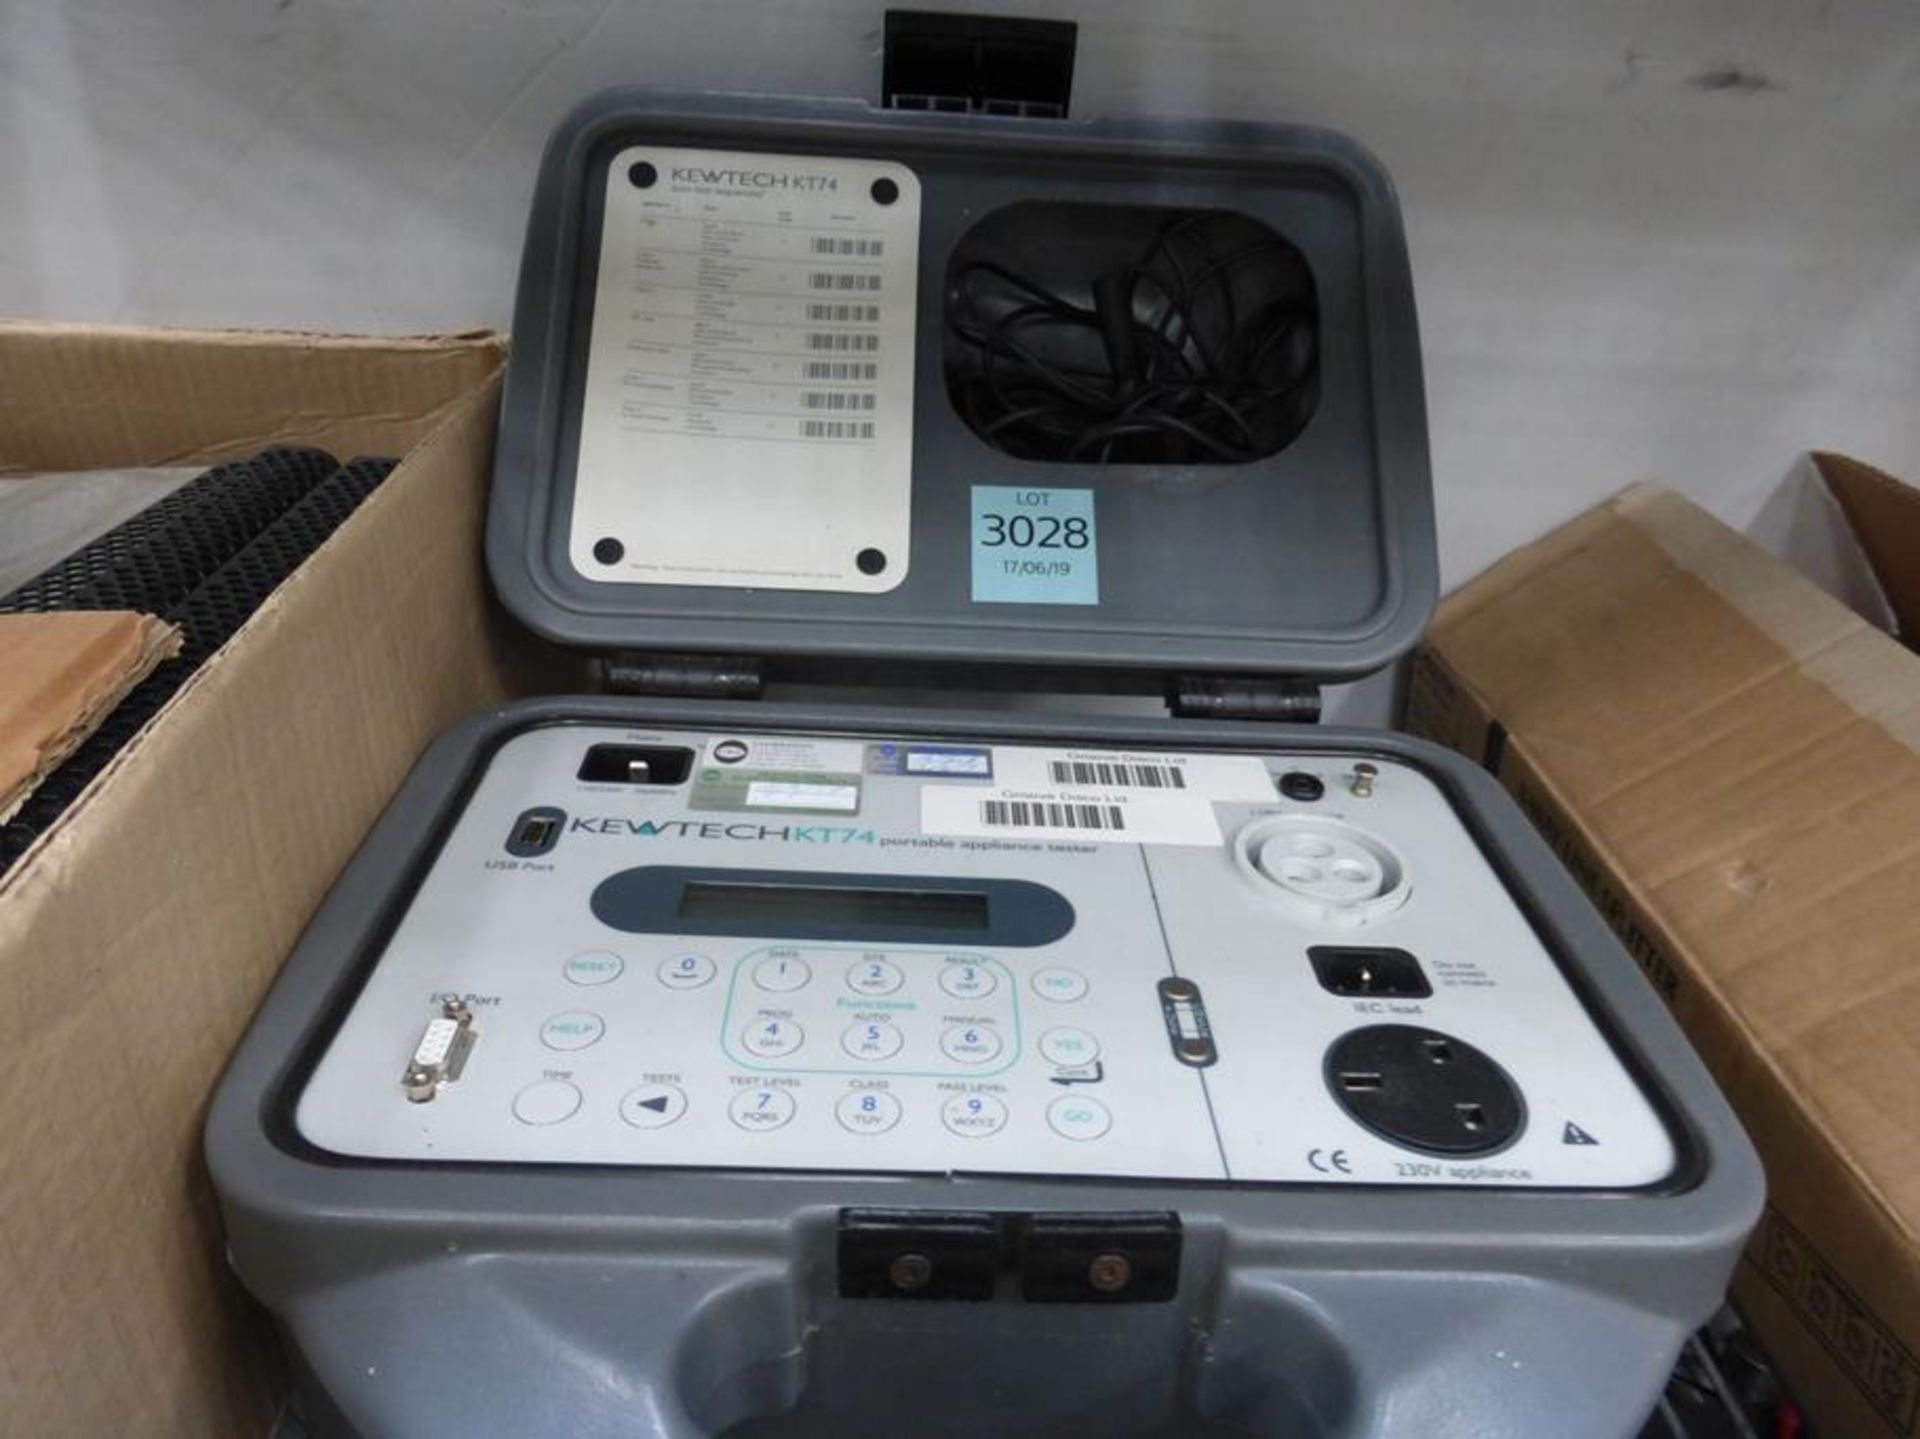 Kewtech KT74 Portable Appliance Tester